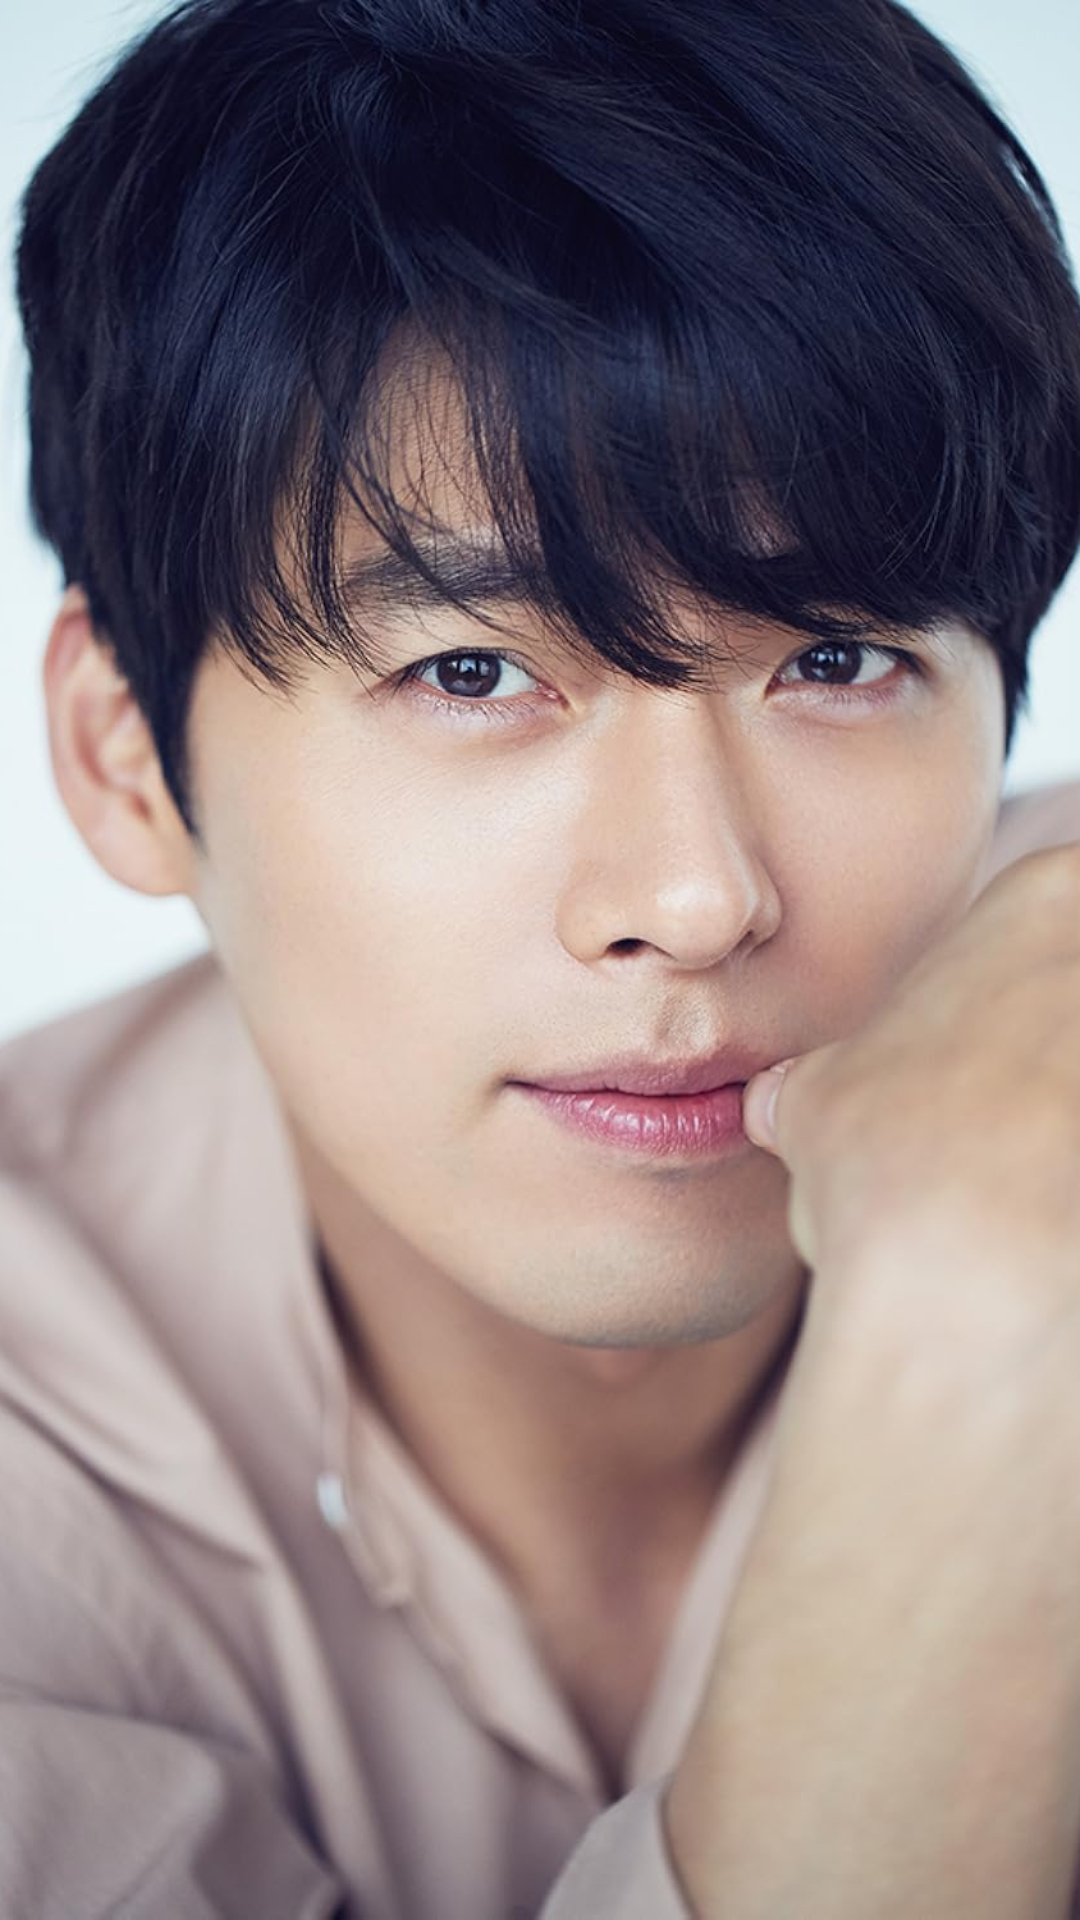 Missing Crash Landing On You star Hyun Bin? Here are 5 must-watch K-Dramas